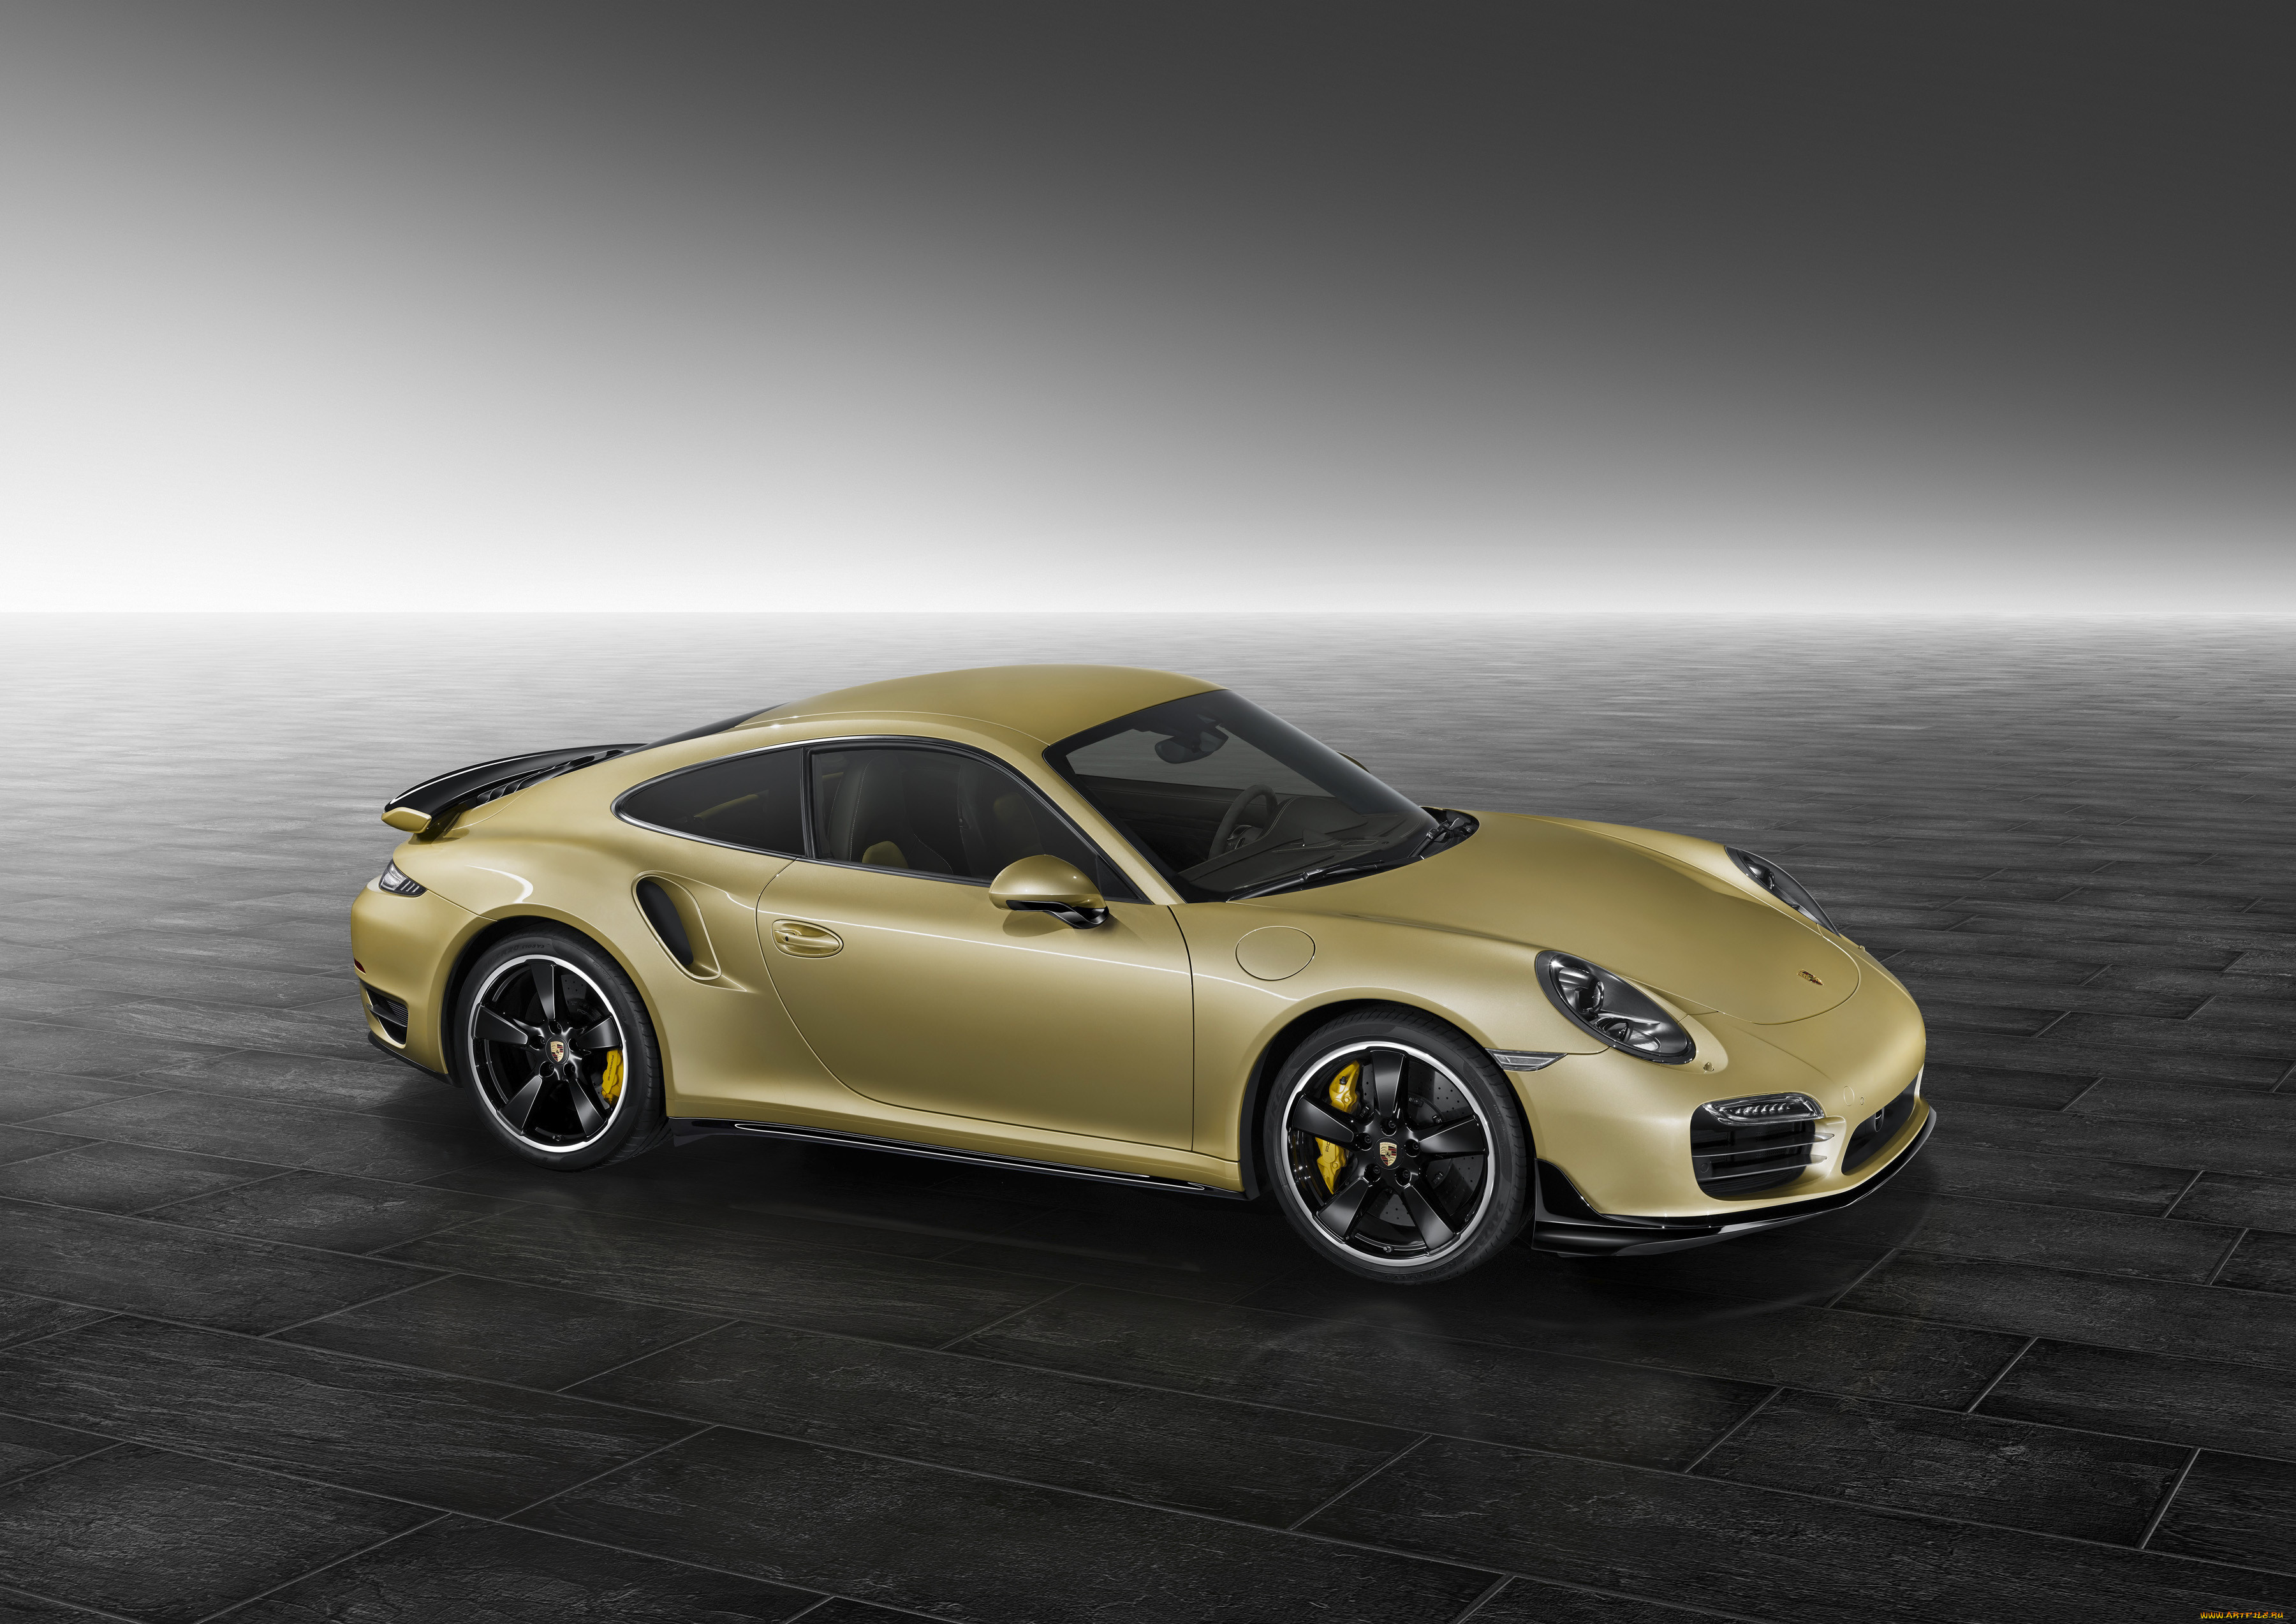 Купить порше купе. Порше 911 купе. Porsche 911 Turbo купе. Порше 911 золотой. Porsche 911 Turbo 2015.